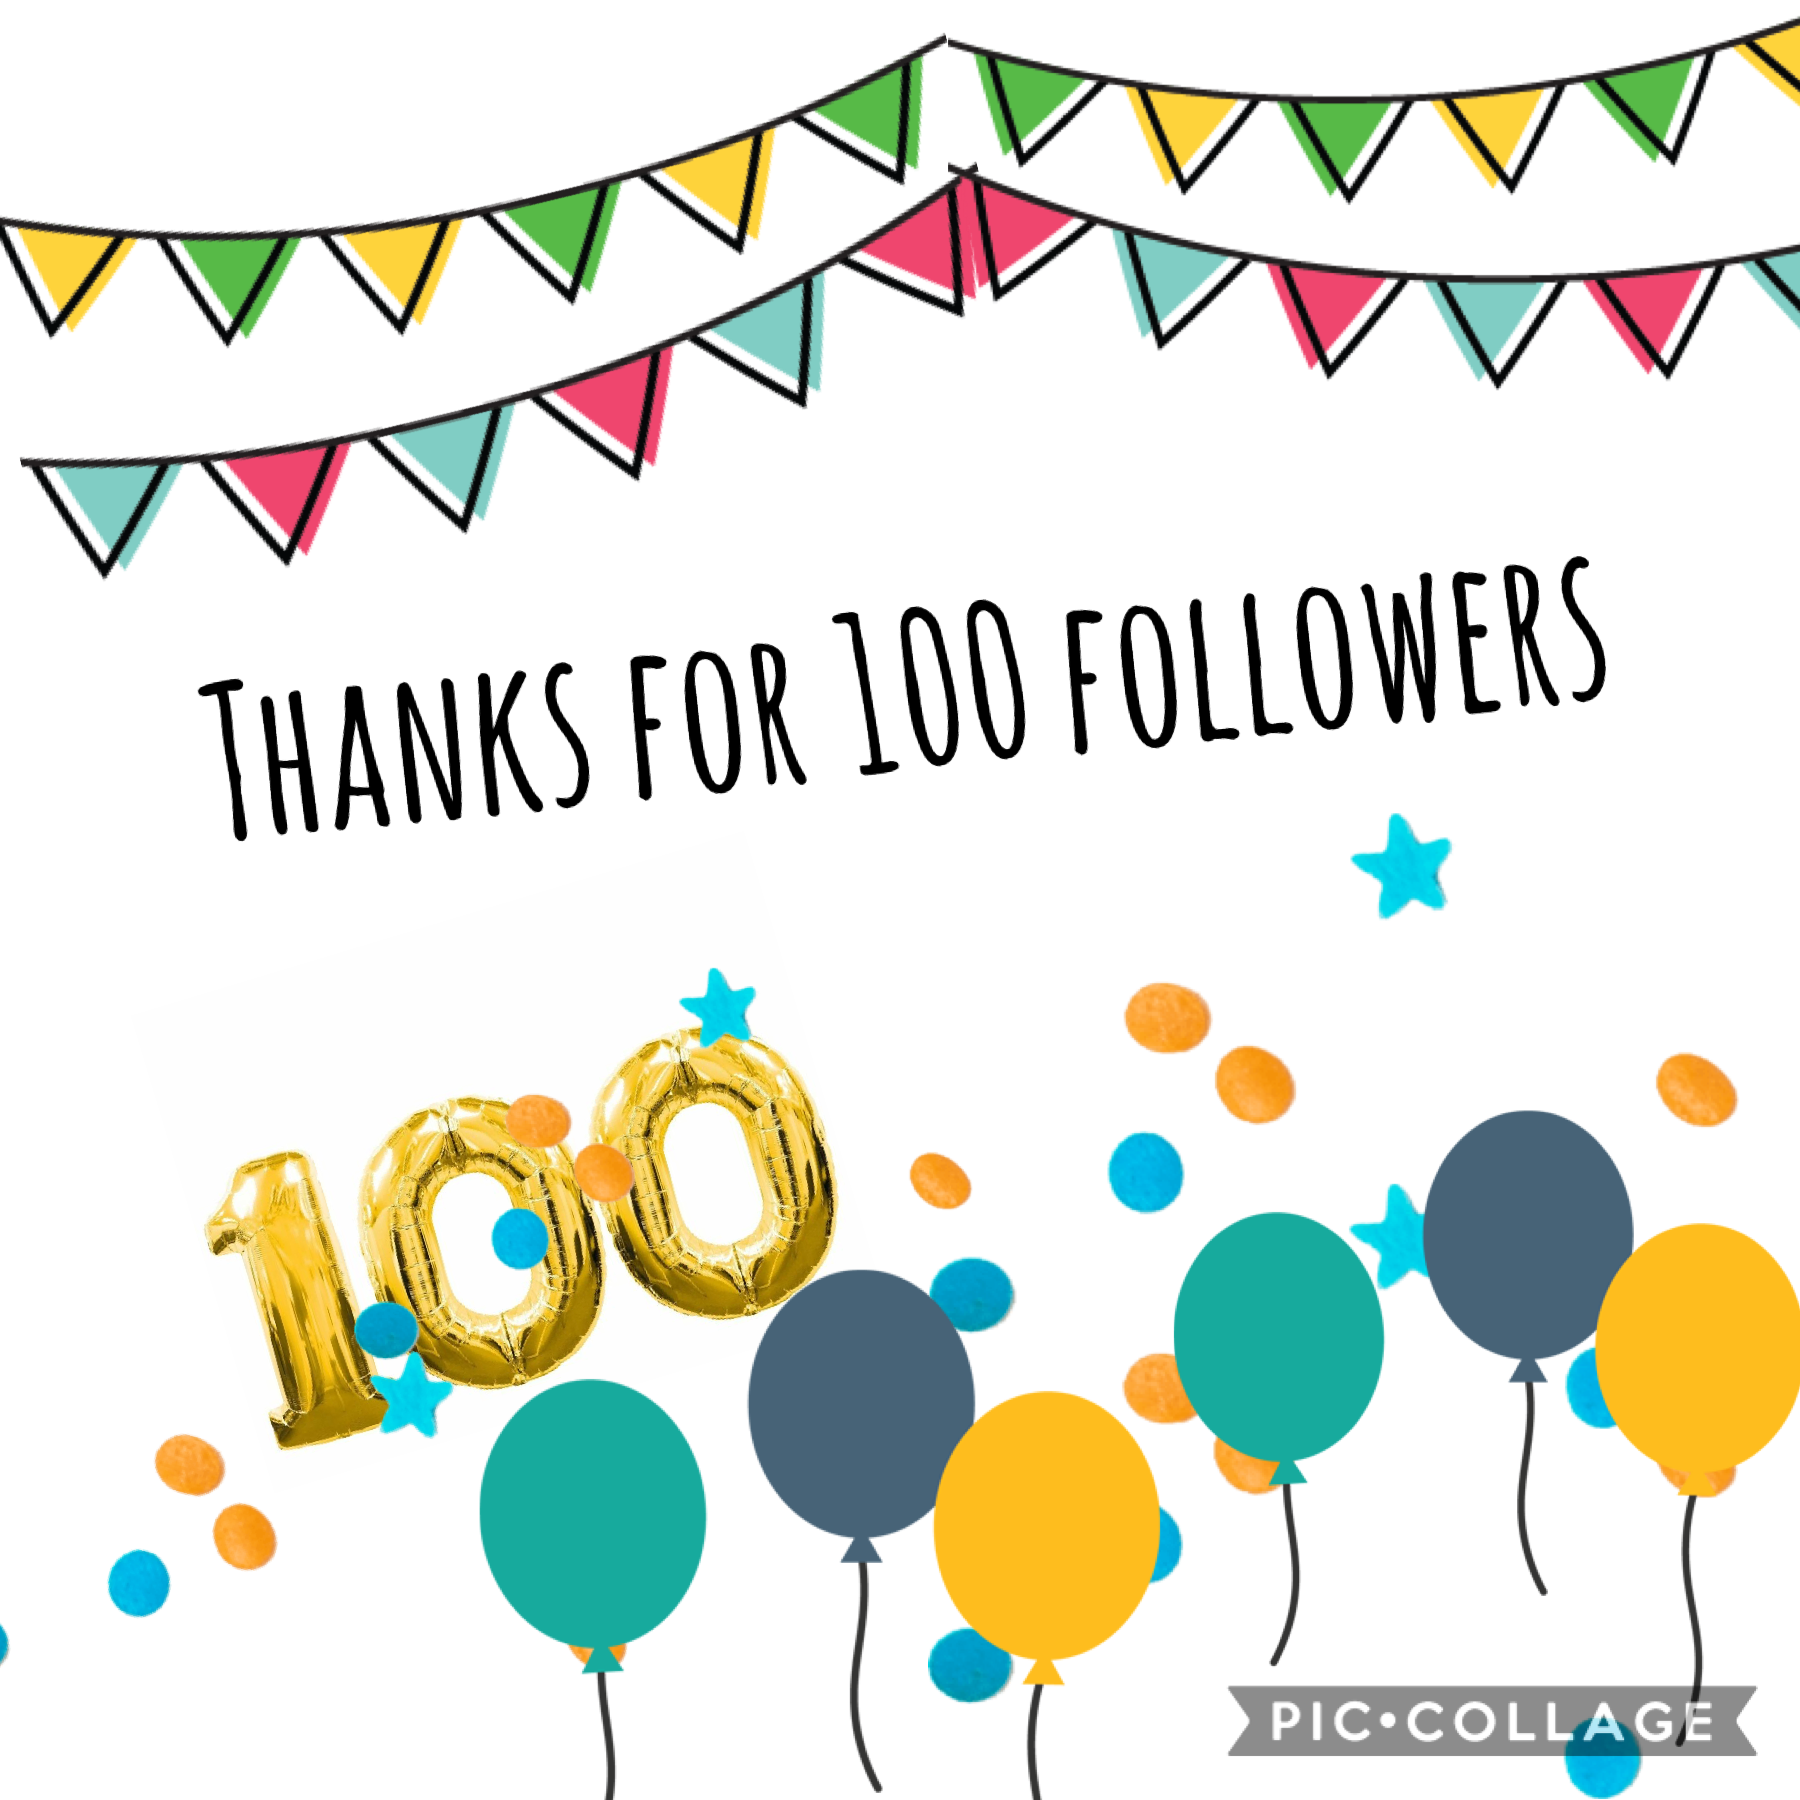 100 followers thank you!!!